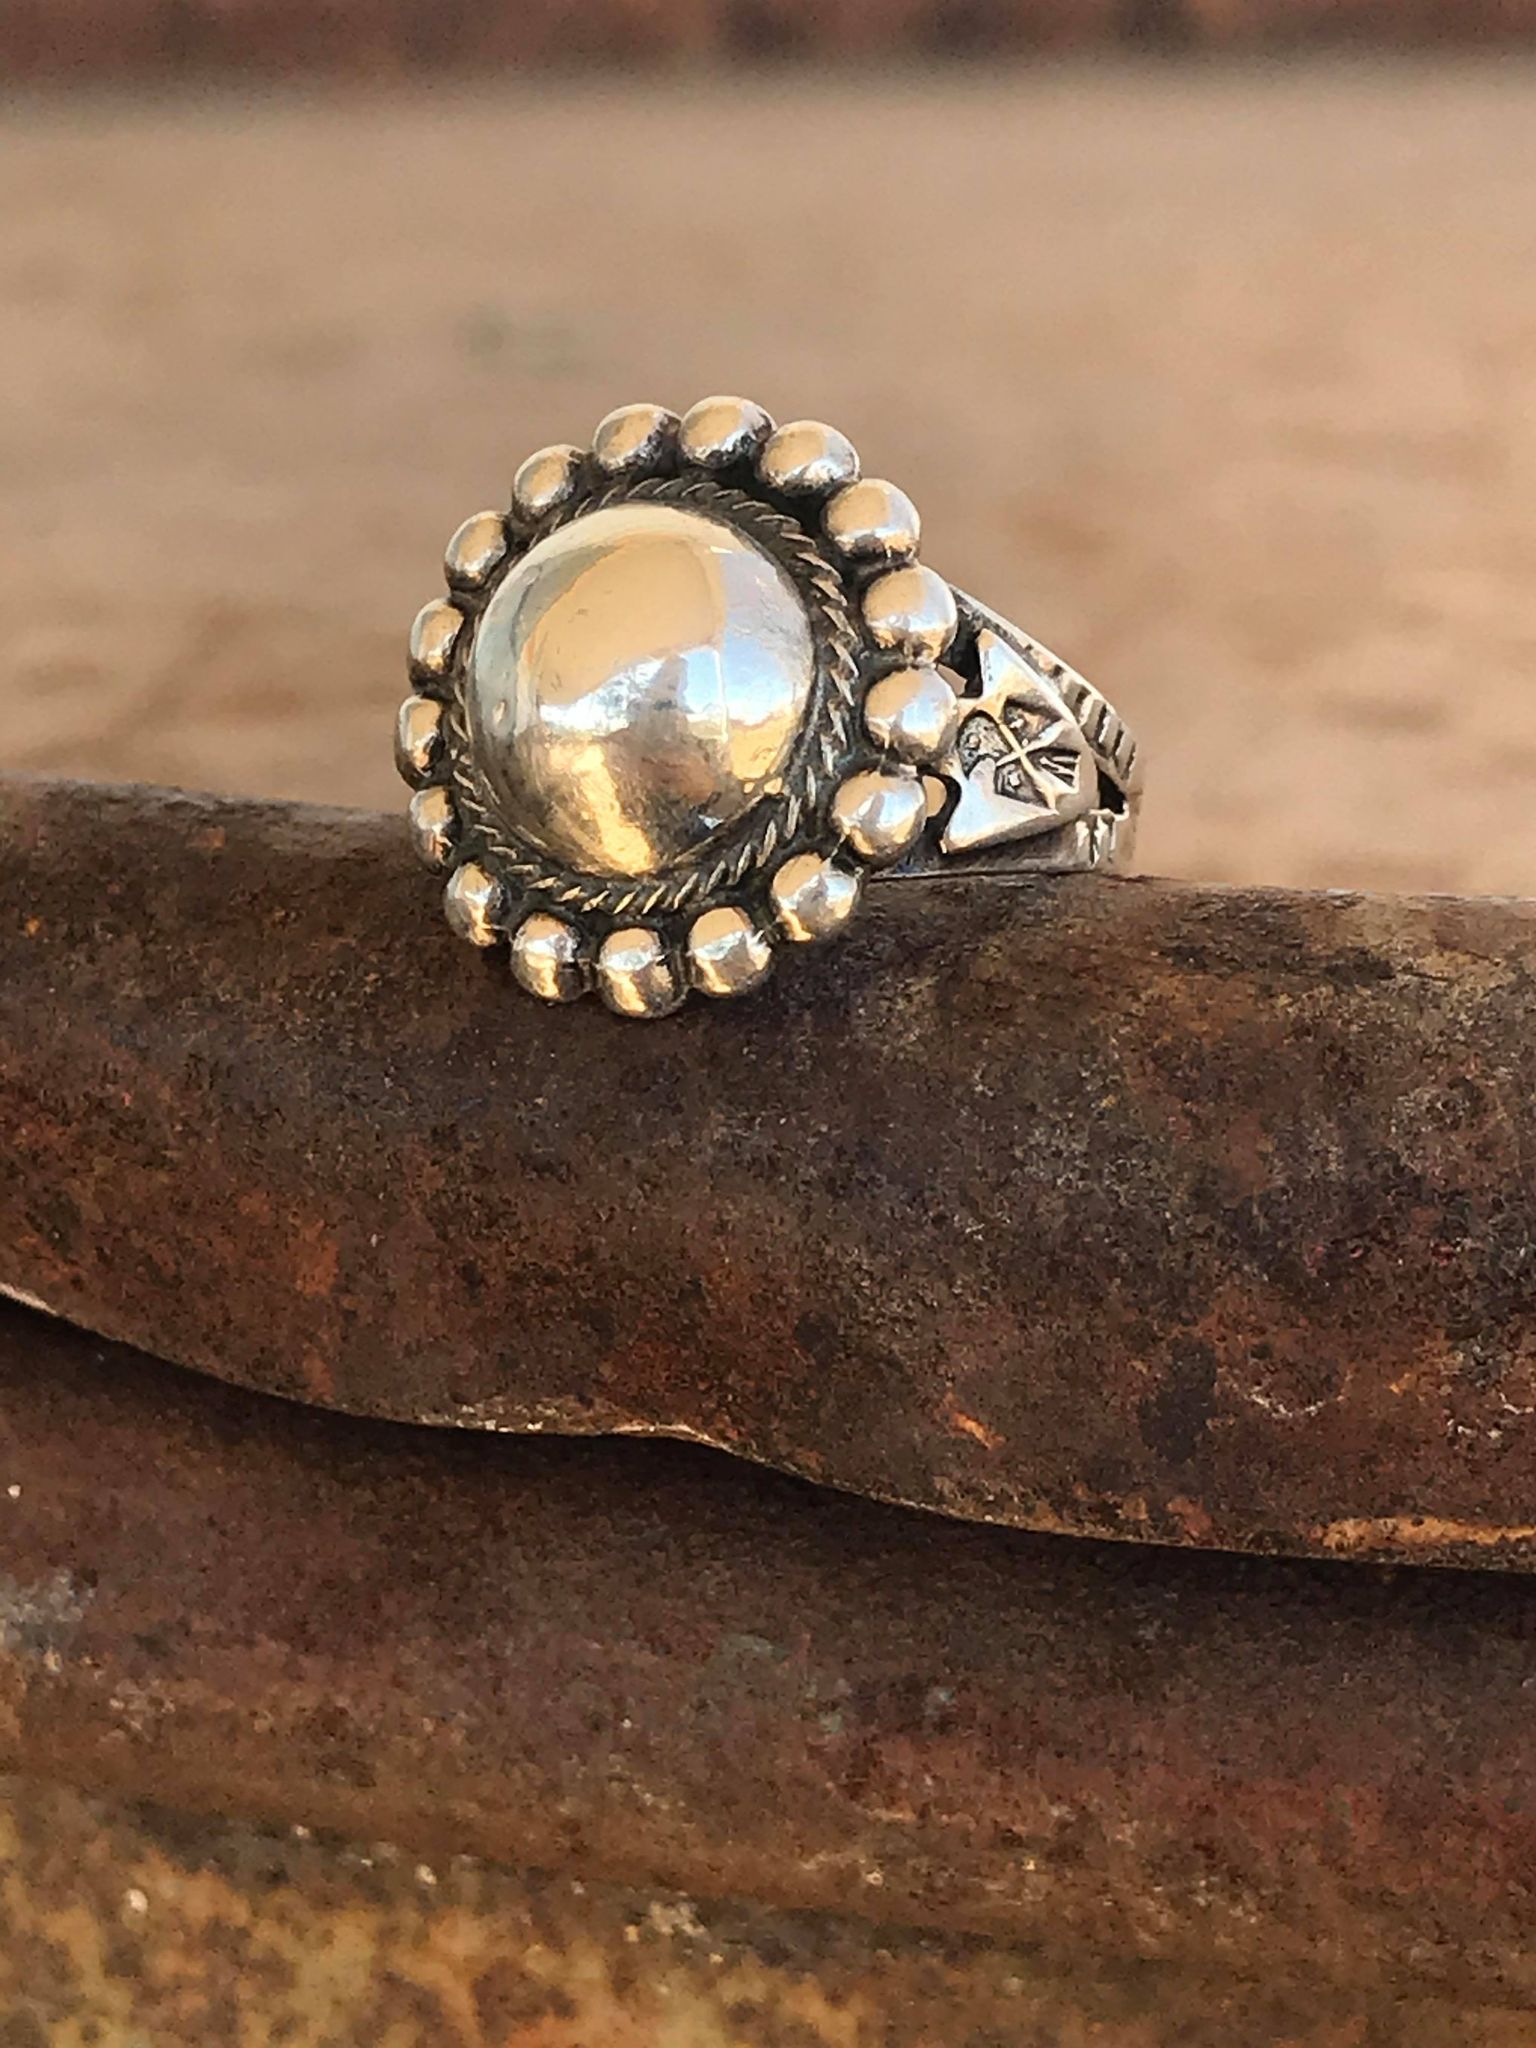 Vintage Sterling Silver Thunderbird Ring